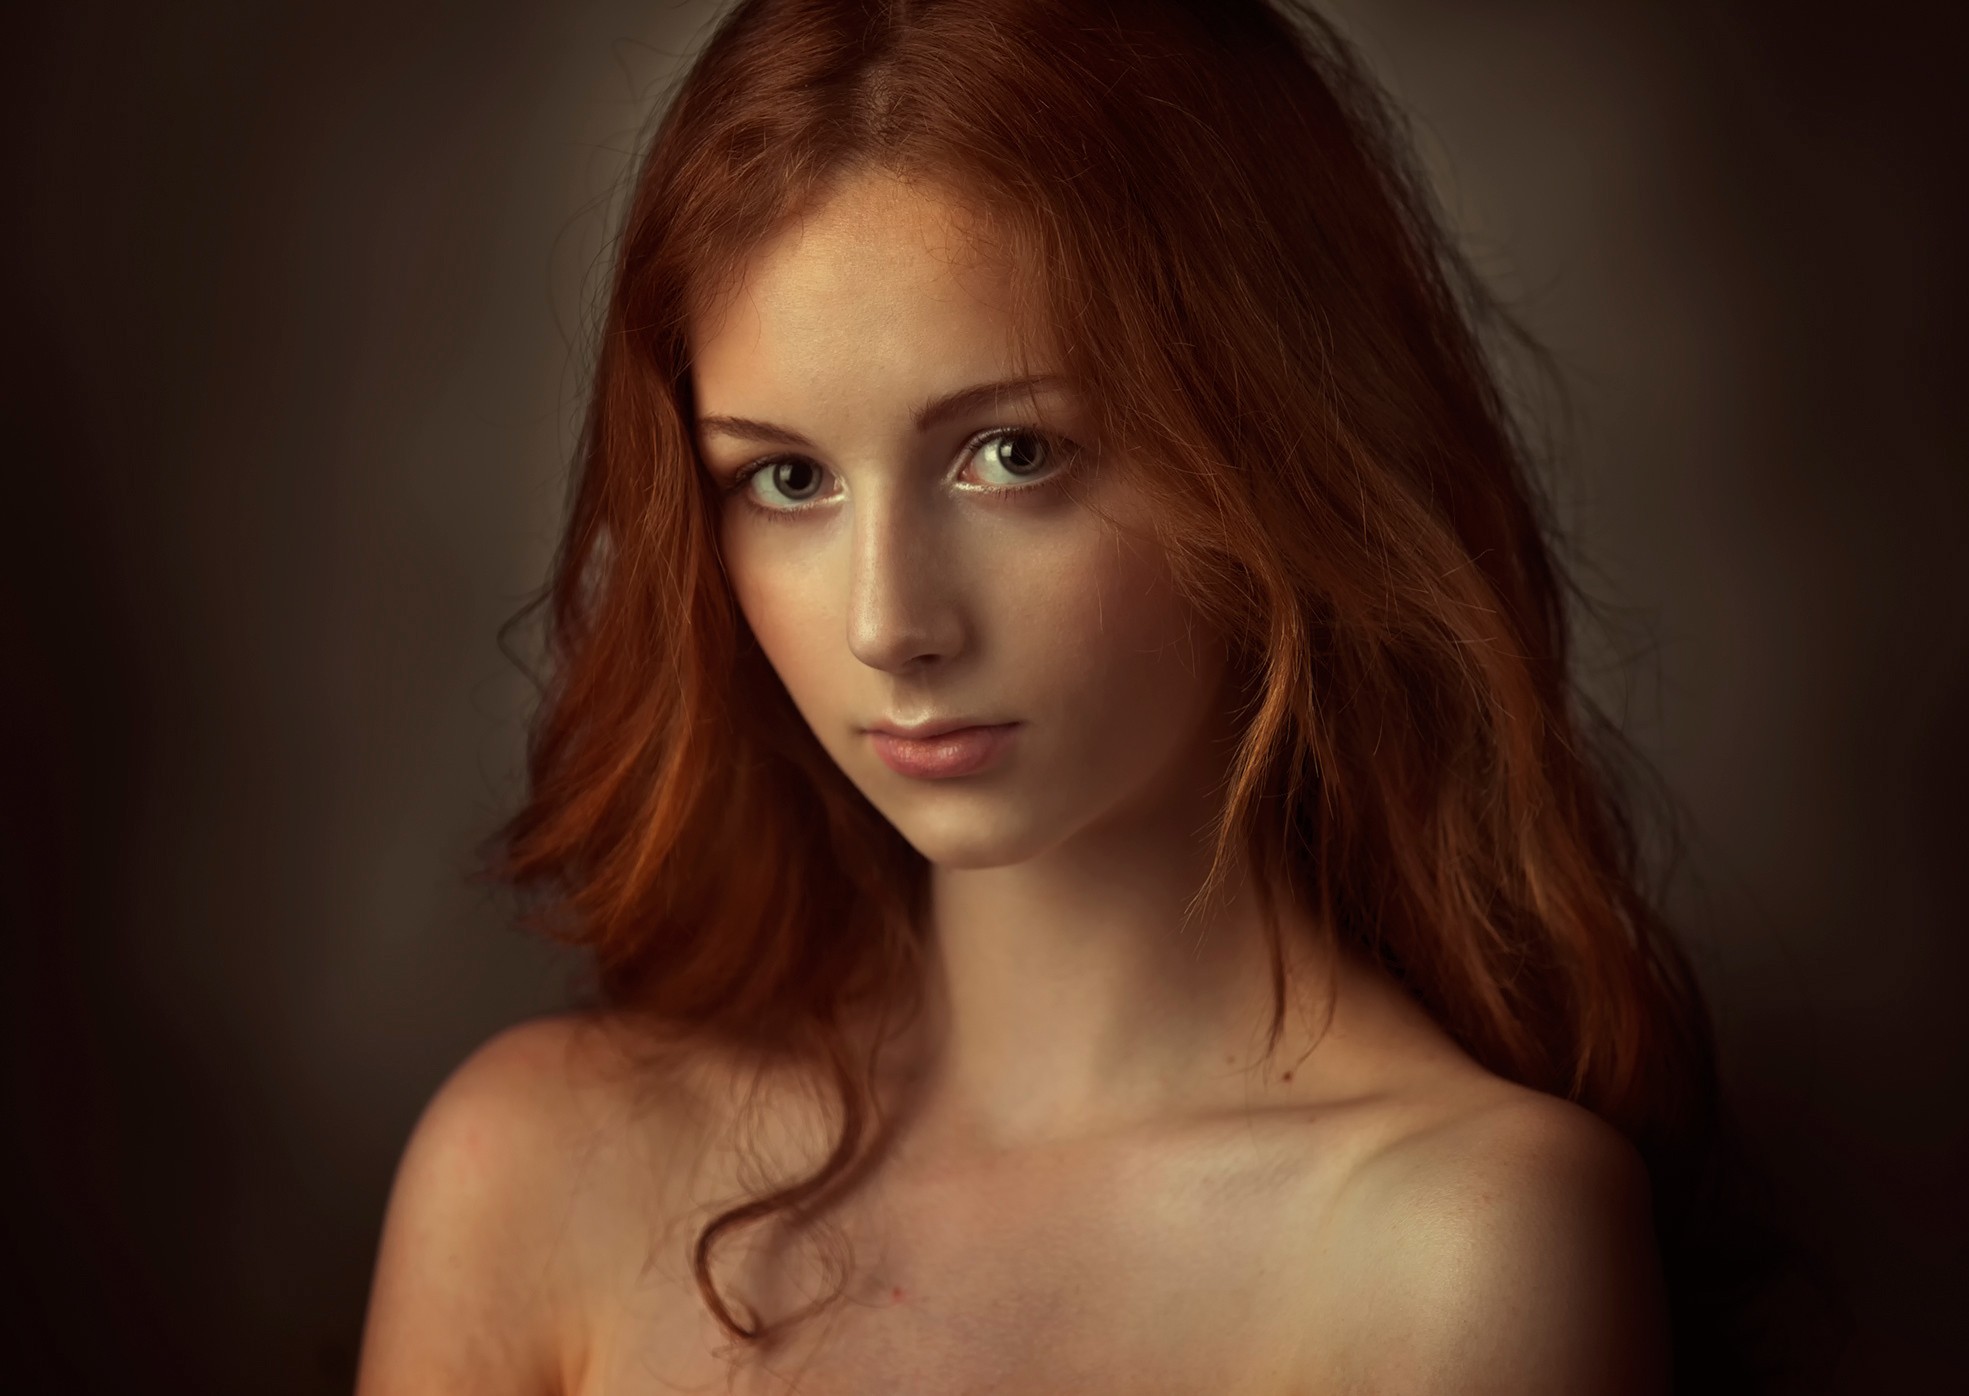 Download Wallpaper For 320x480 Resolution Women Face Portrait Model Redhead Girls